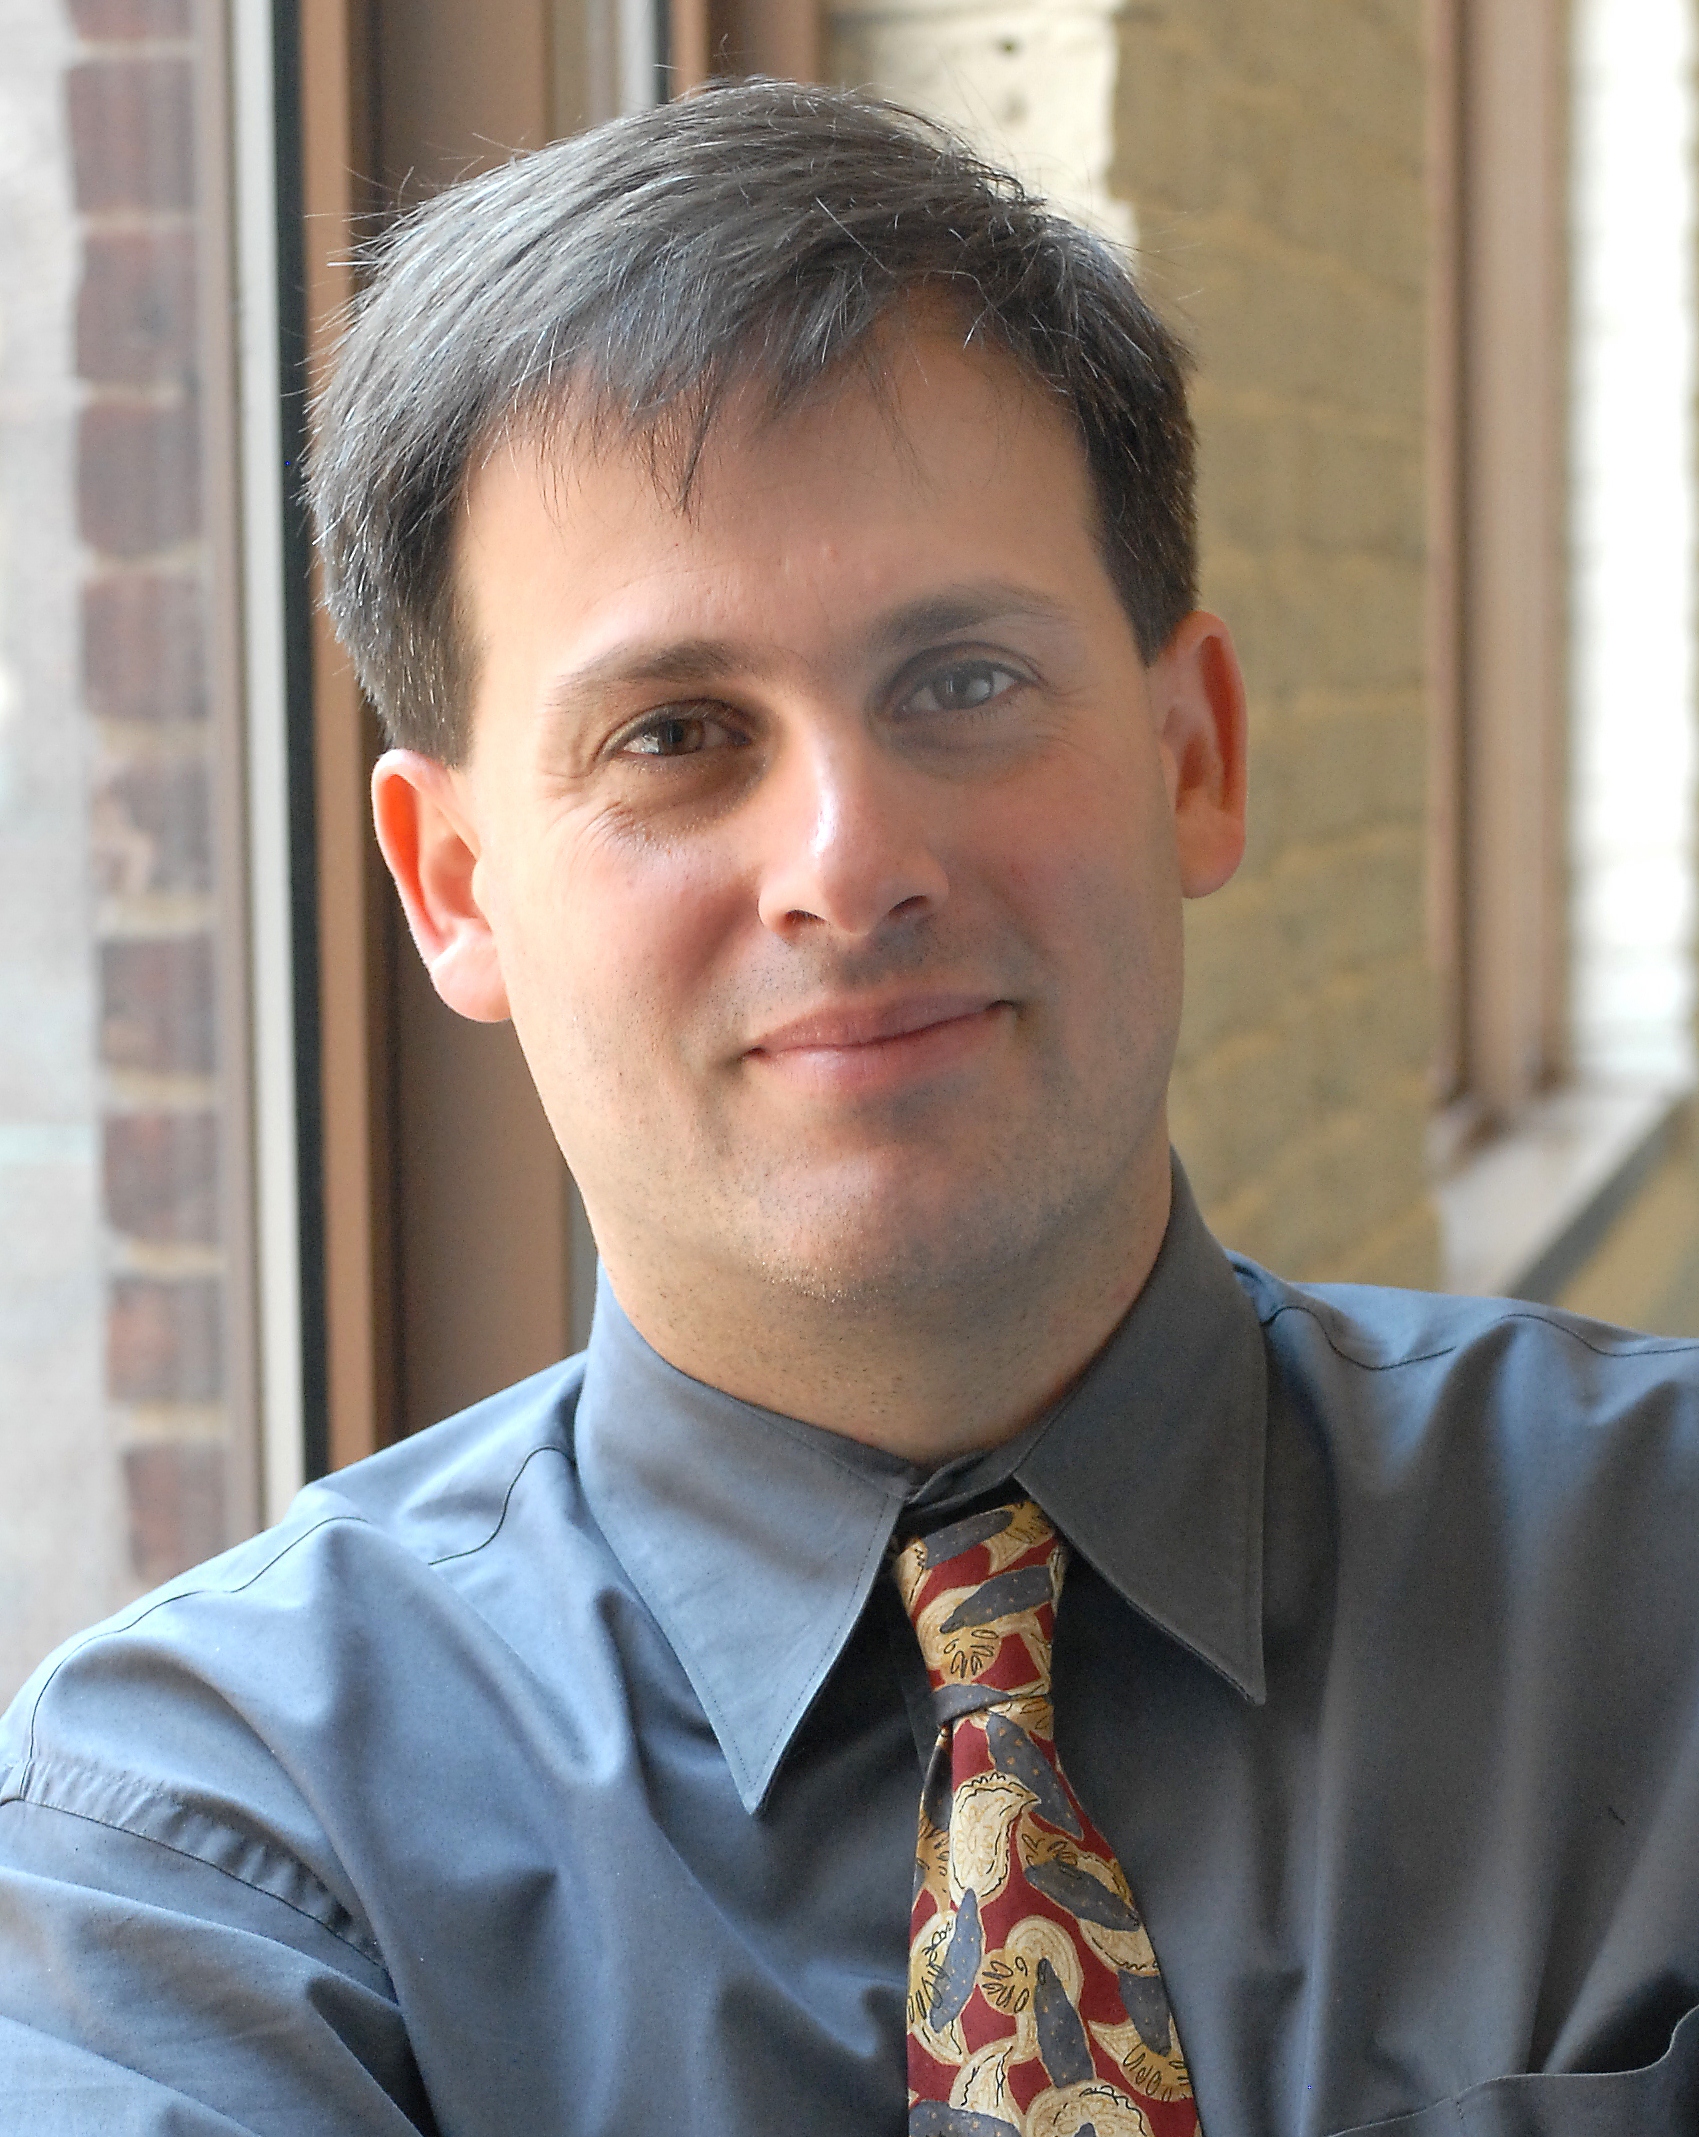 Michael Chernew, Professor of Health Care Policy